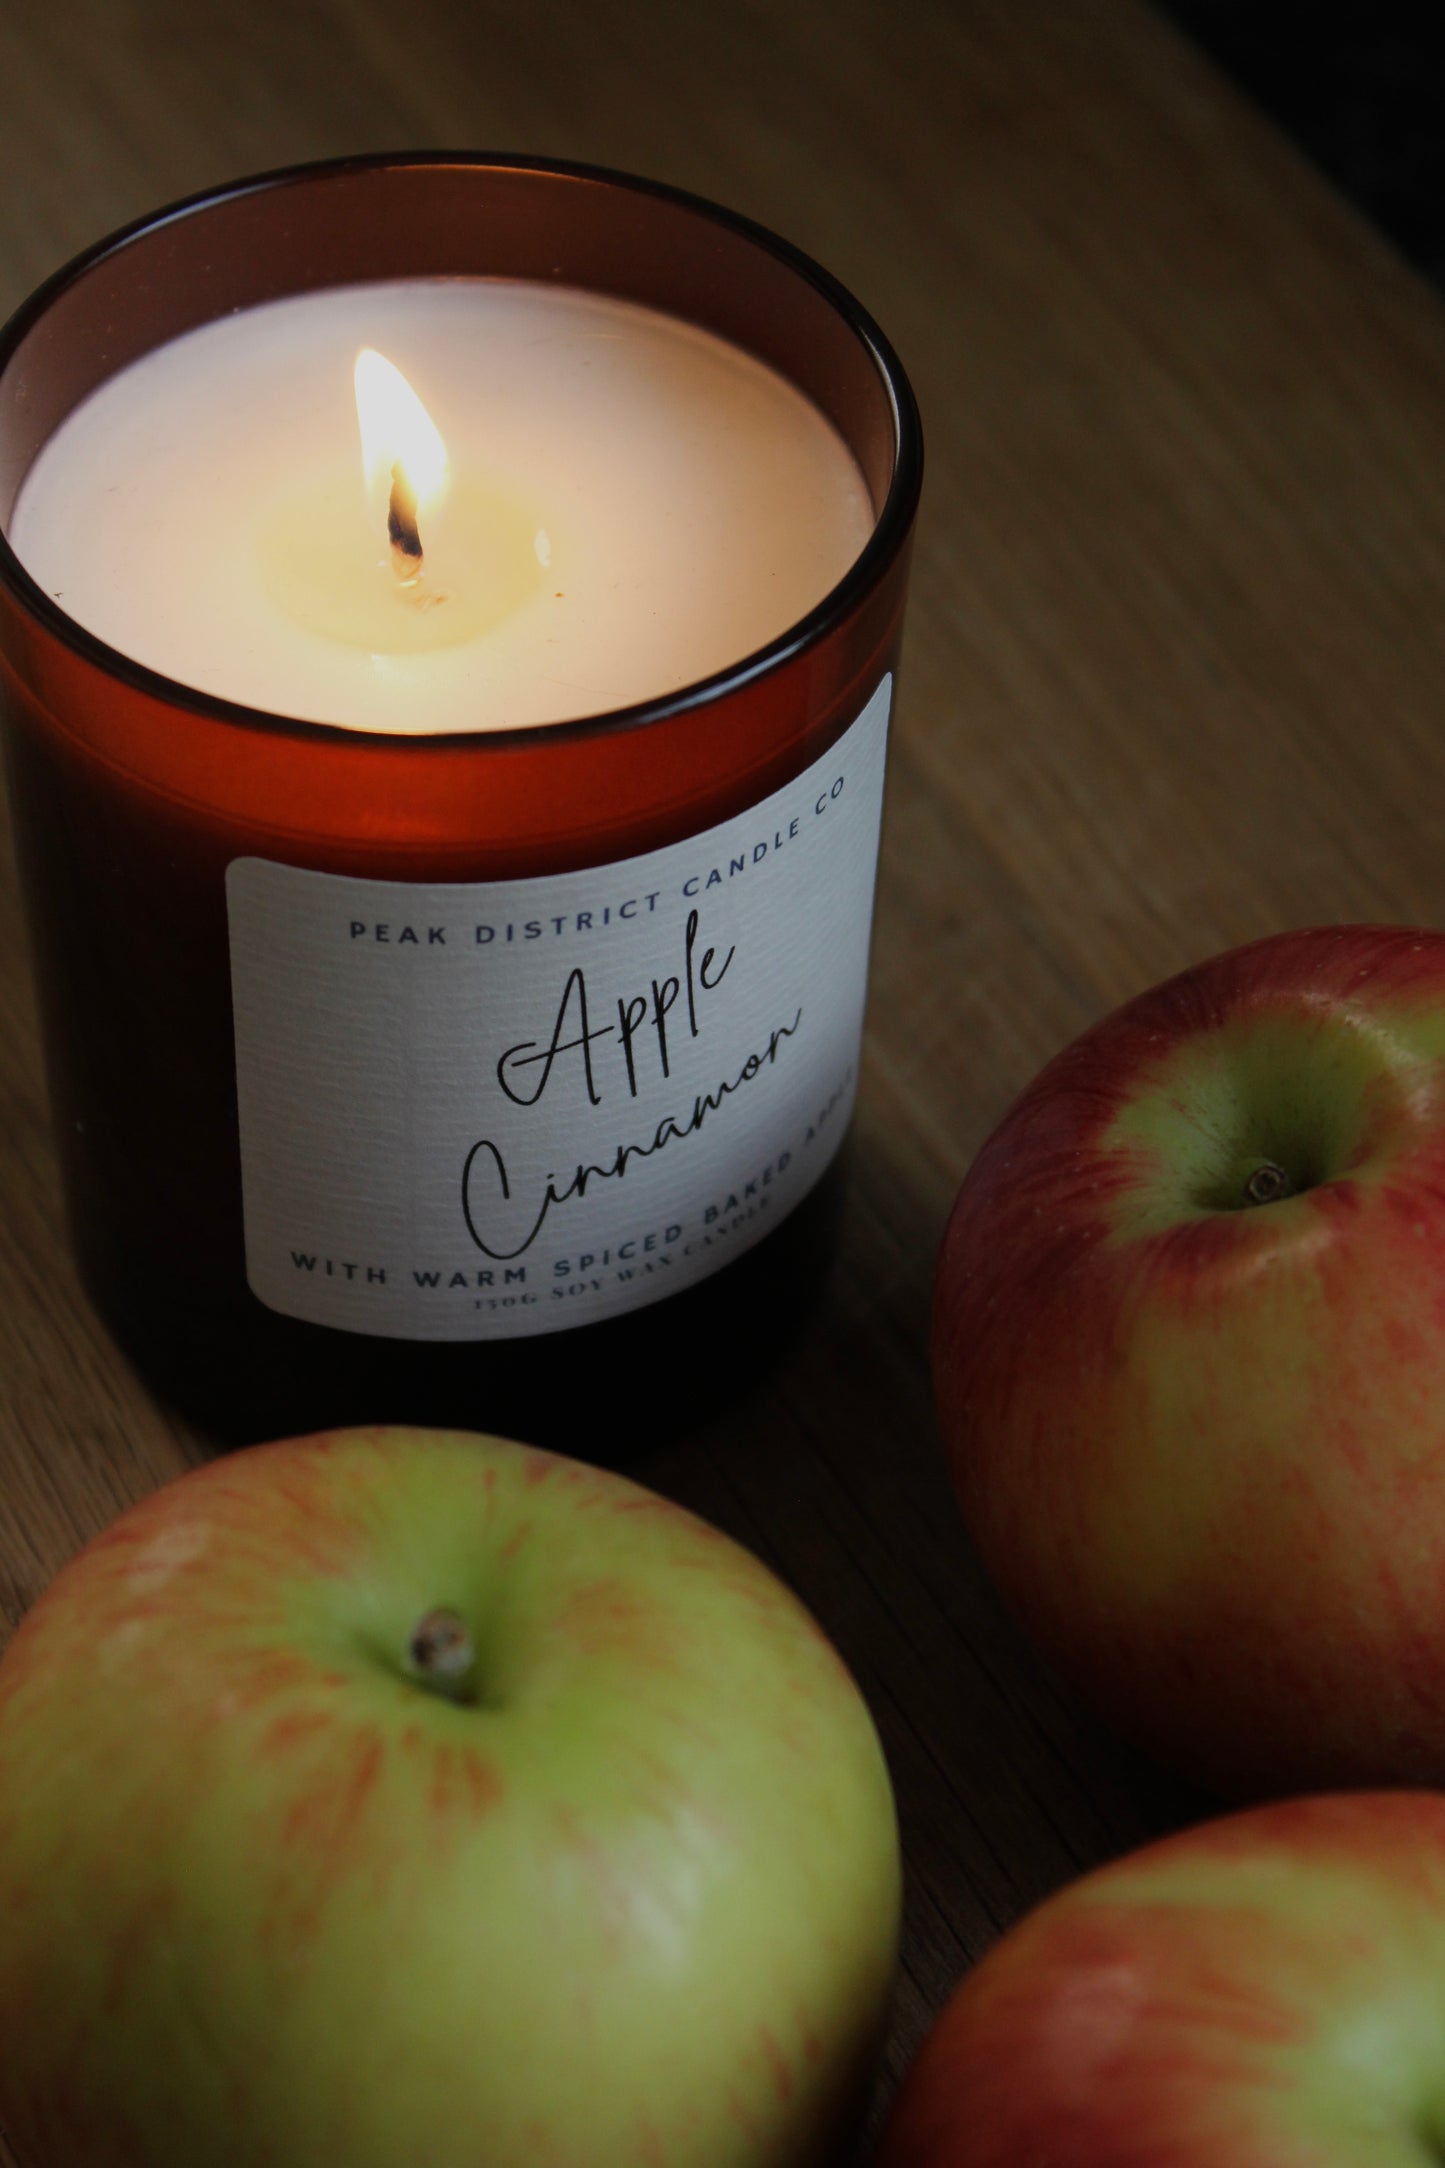 Apple Cinnamon Soy Candle